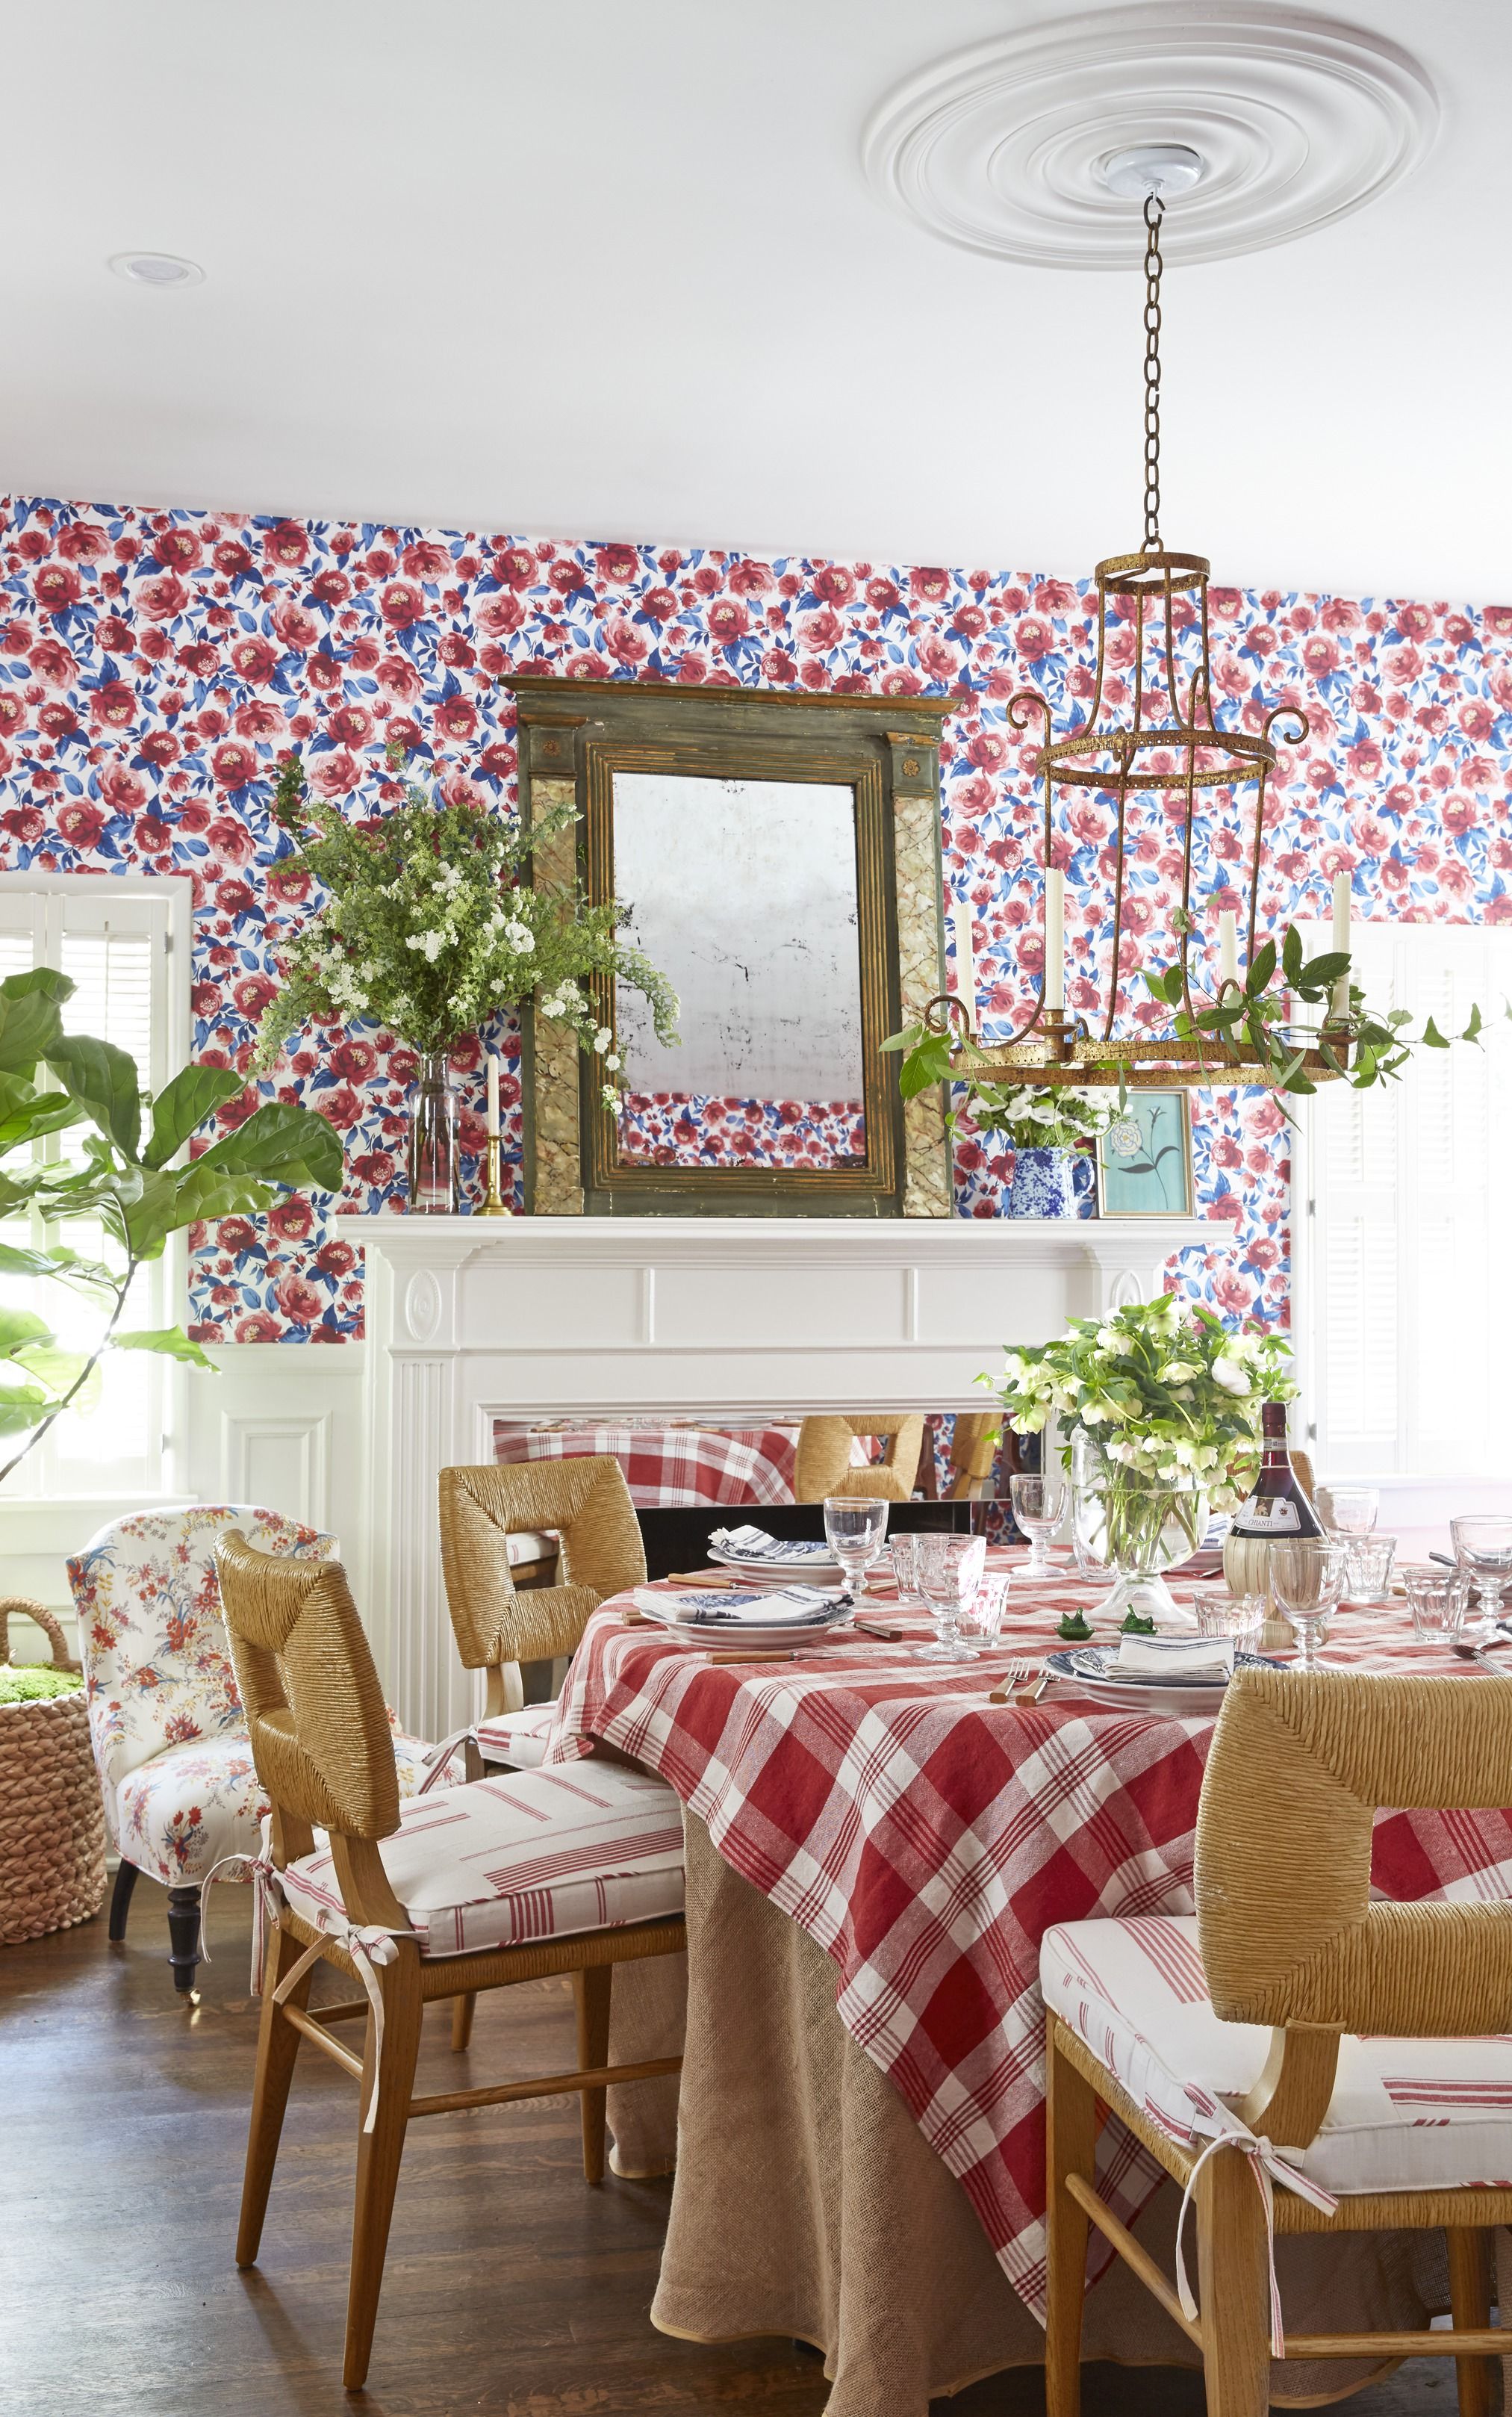 Kitchen Wallpaper Ideas for the Family Kitchen - Home Flair Decor | Blog